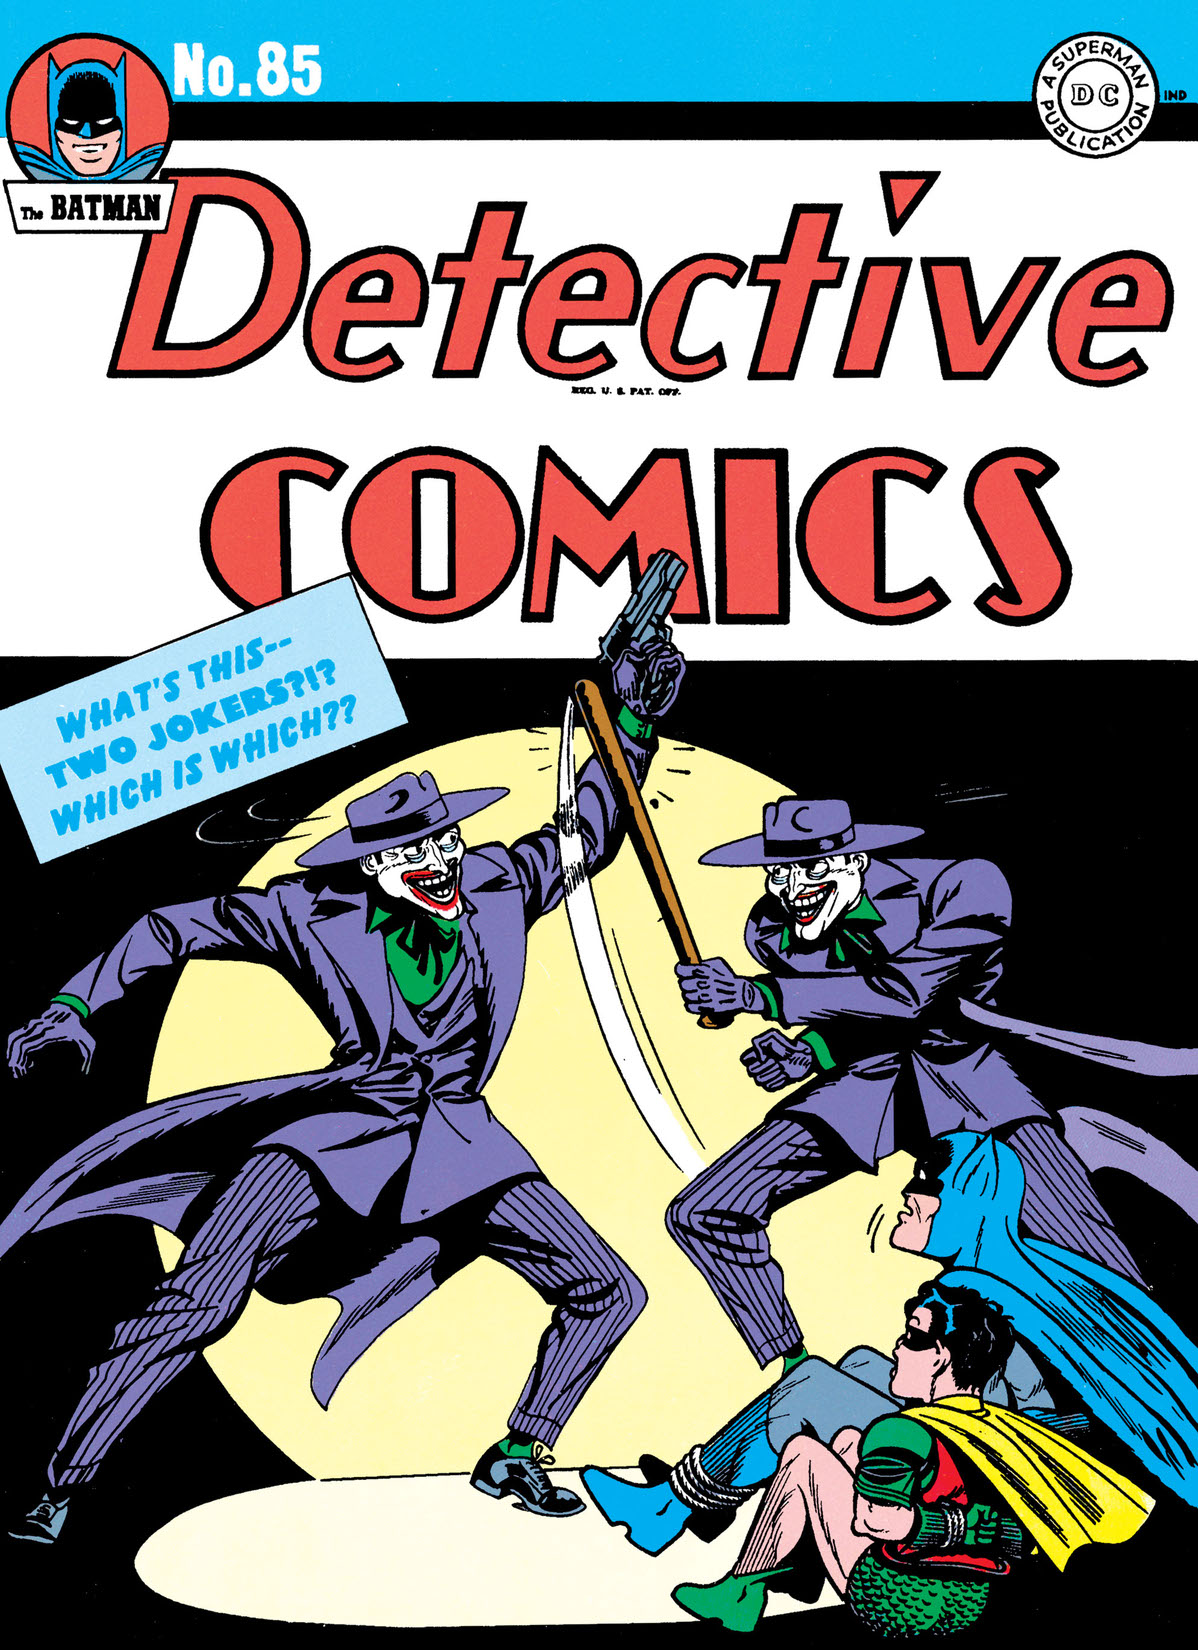 Detective Comics (1937-) #85 preview images